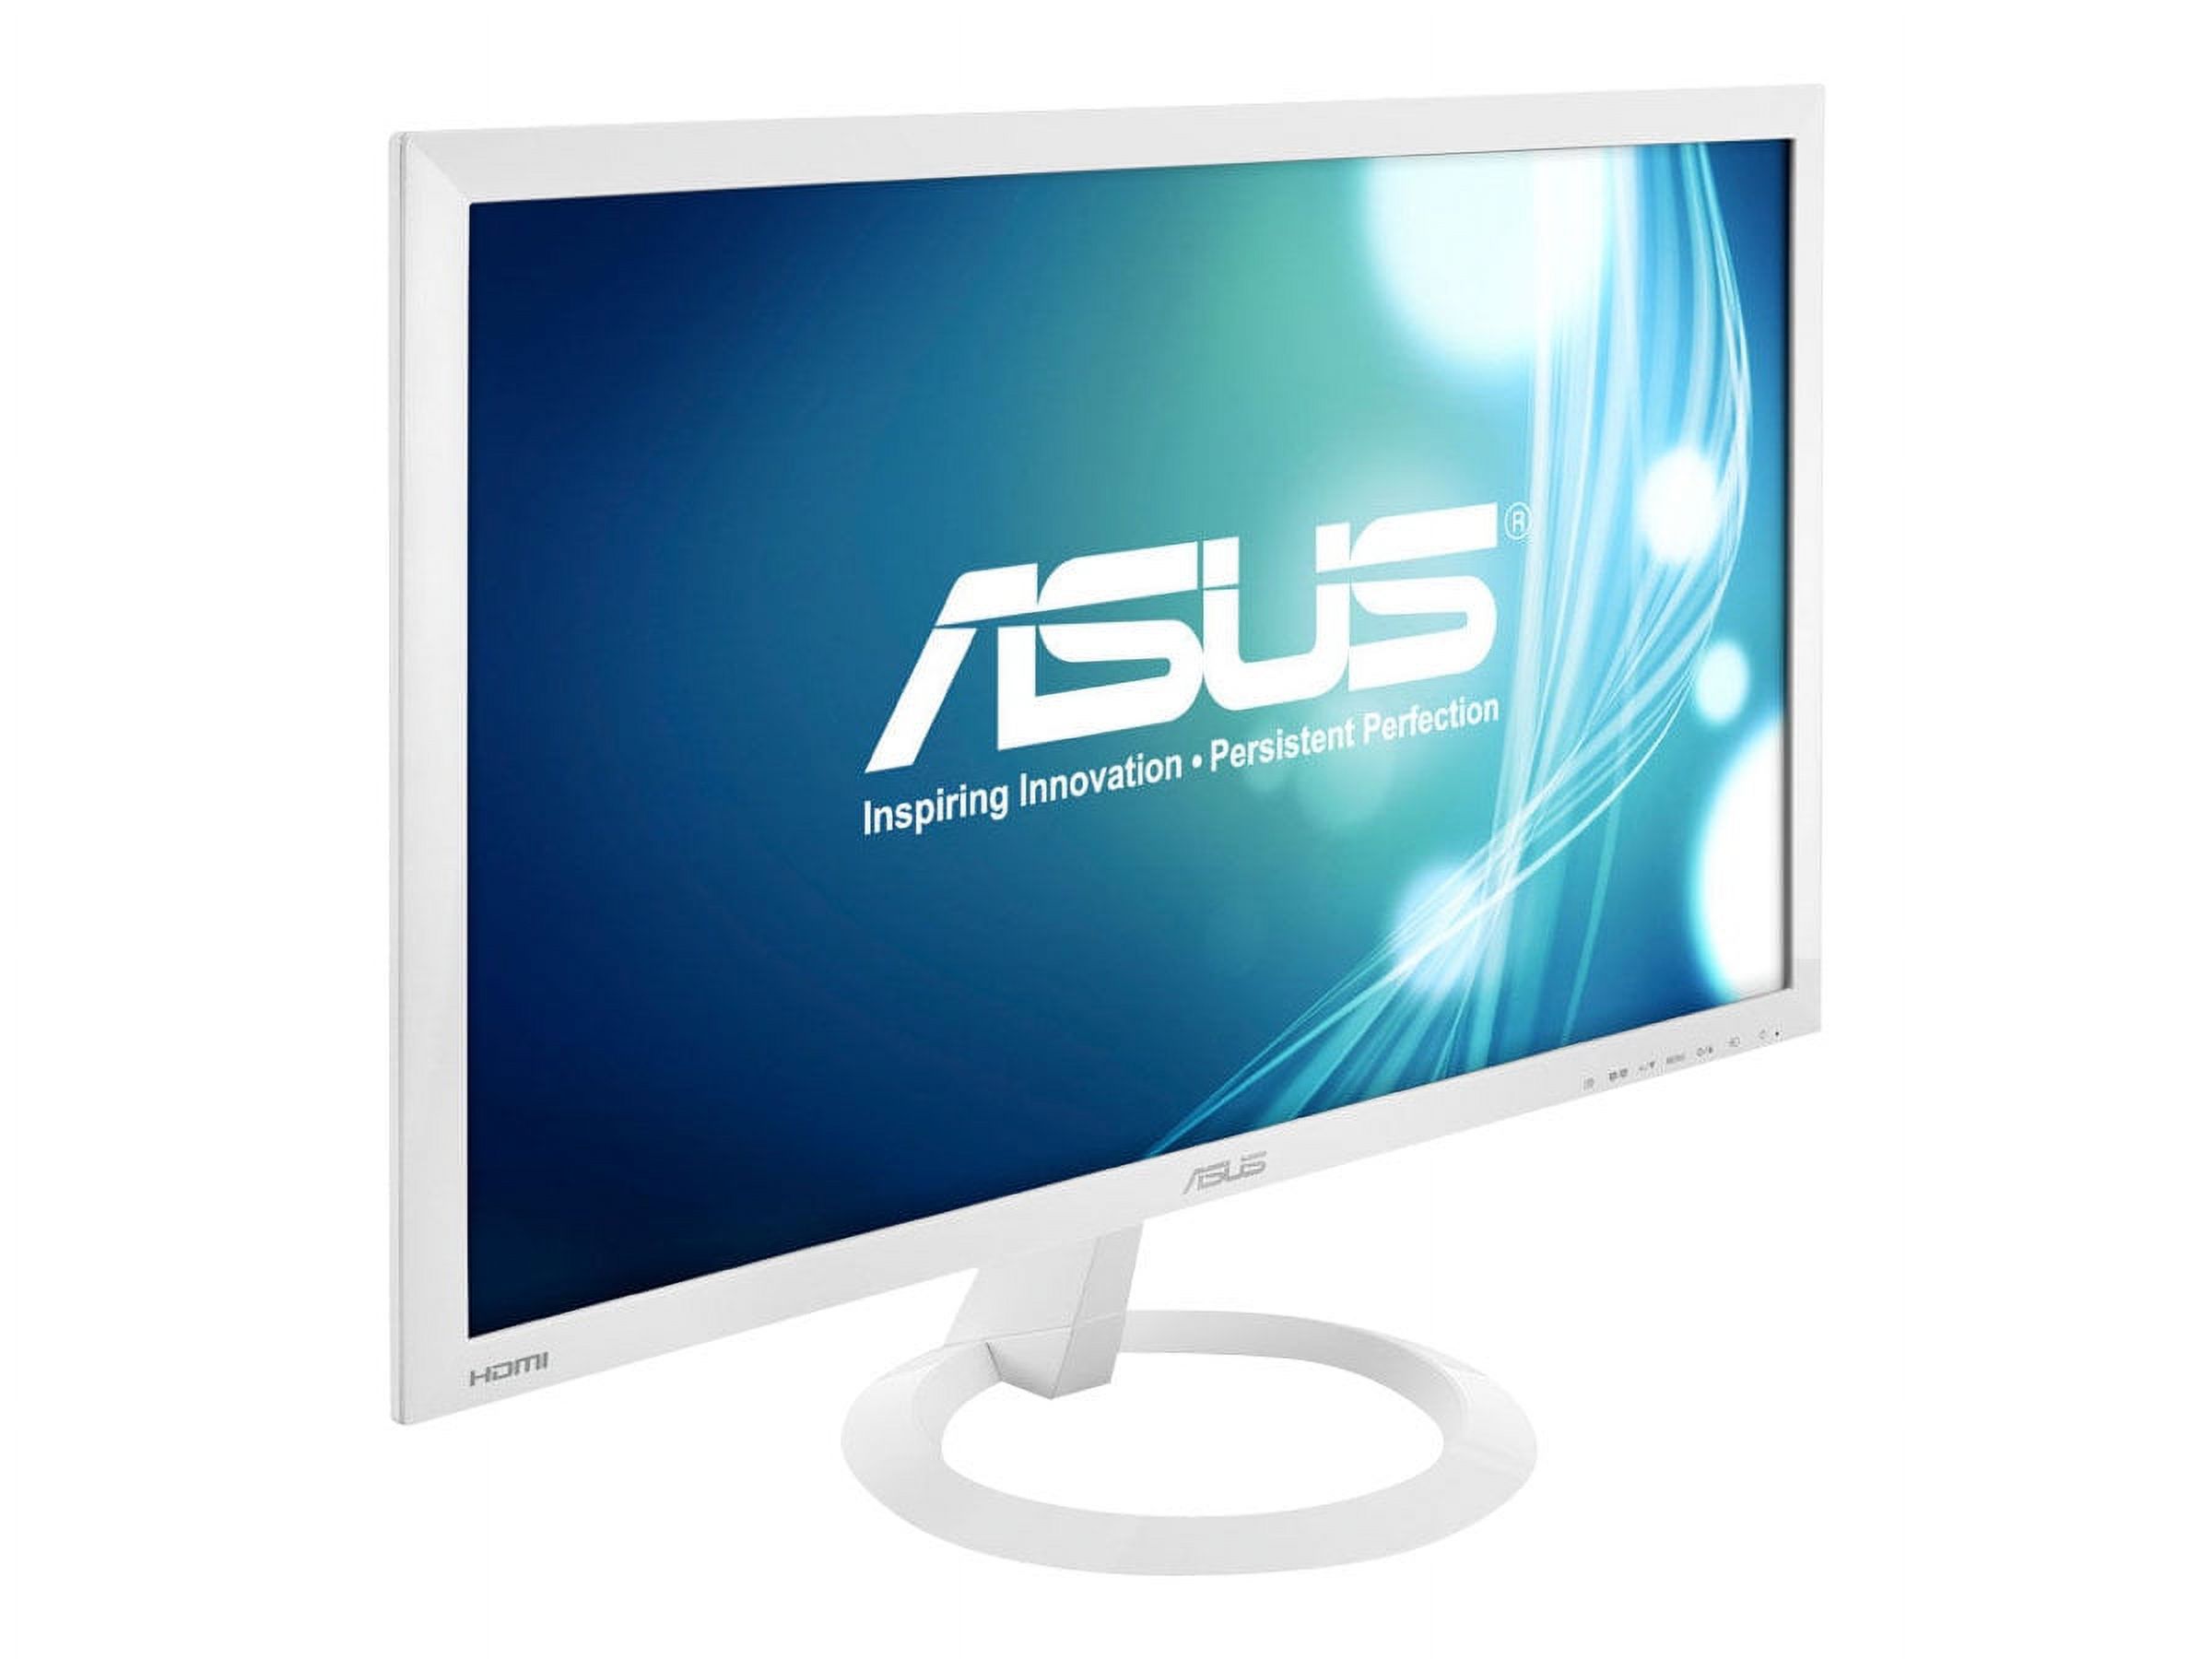 ASUS VX238H-W - LED monitor - 23" - 1920 x 1080 Full HD (1080p) - TN - 250 cd/m������ - 1000:1 - 1 ms - 2xHDMI, VGA - speakers - white - image 2 of 6